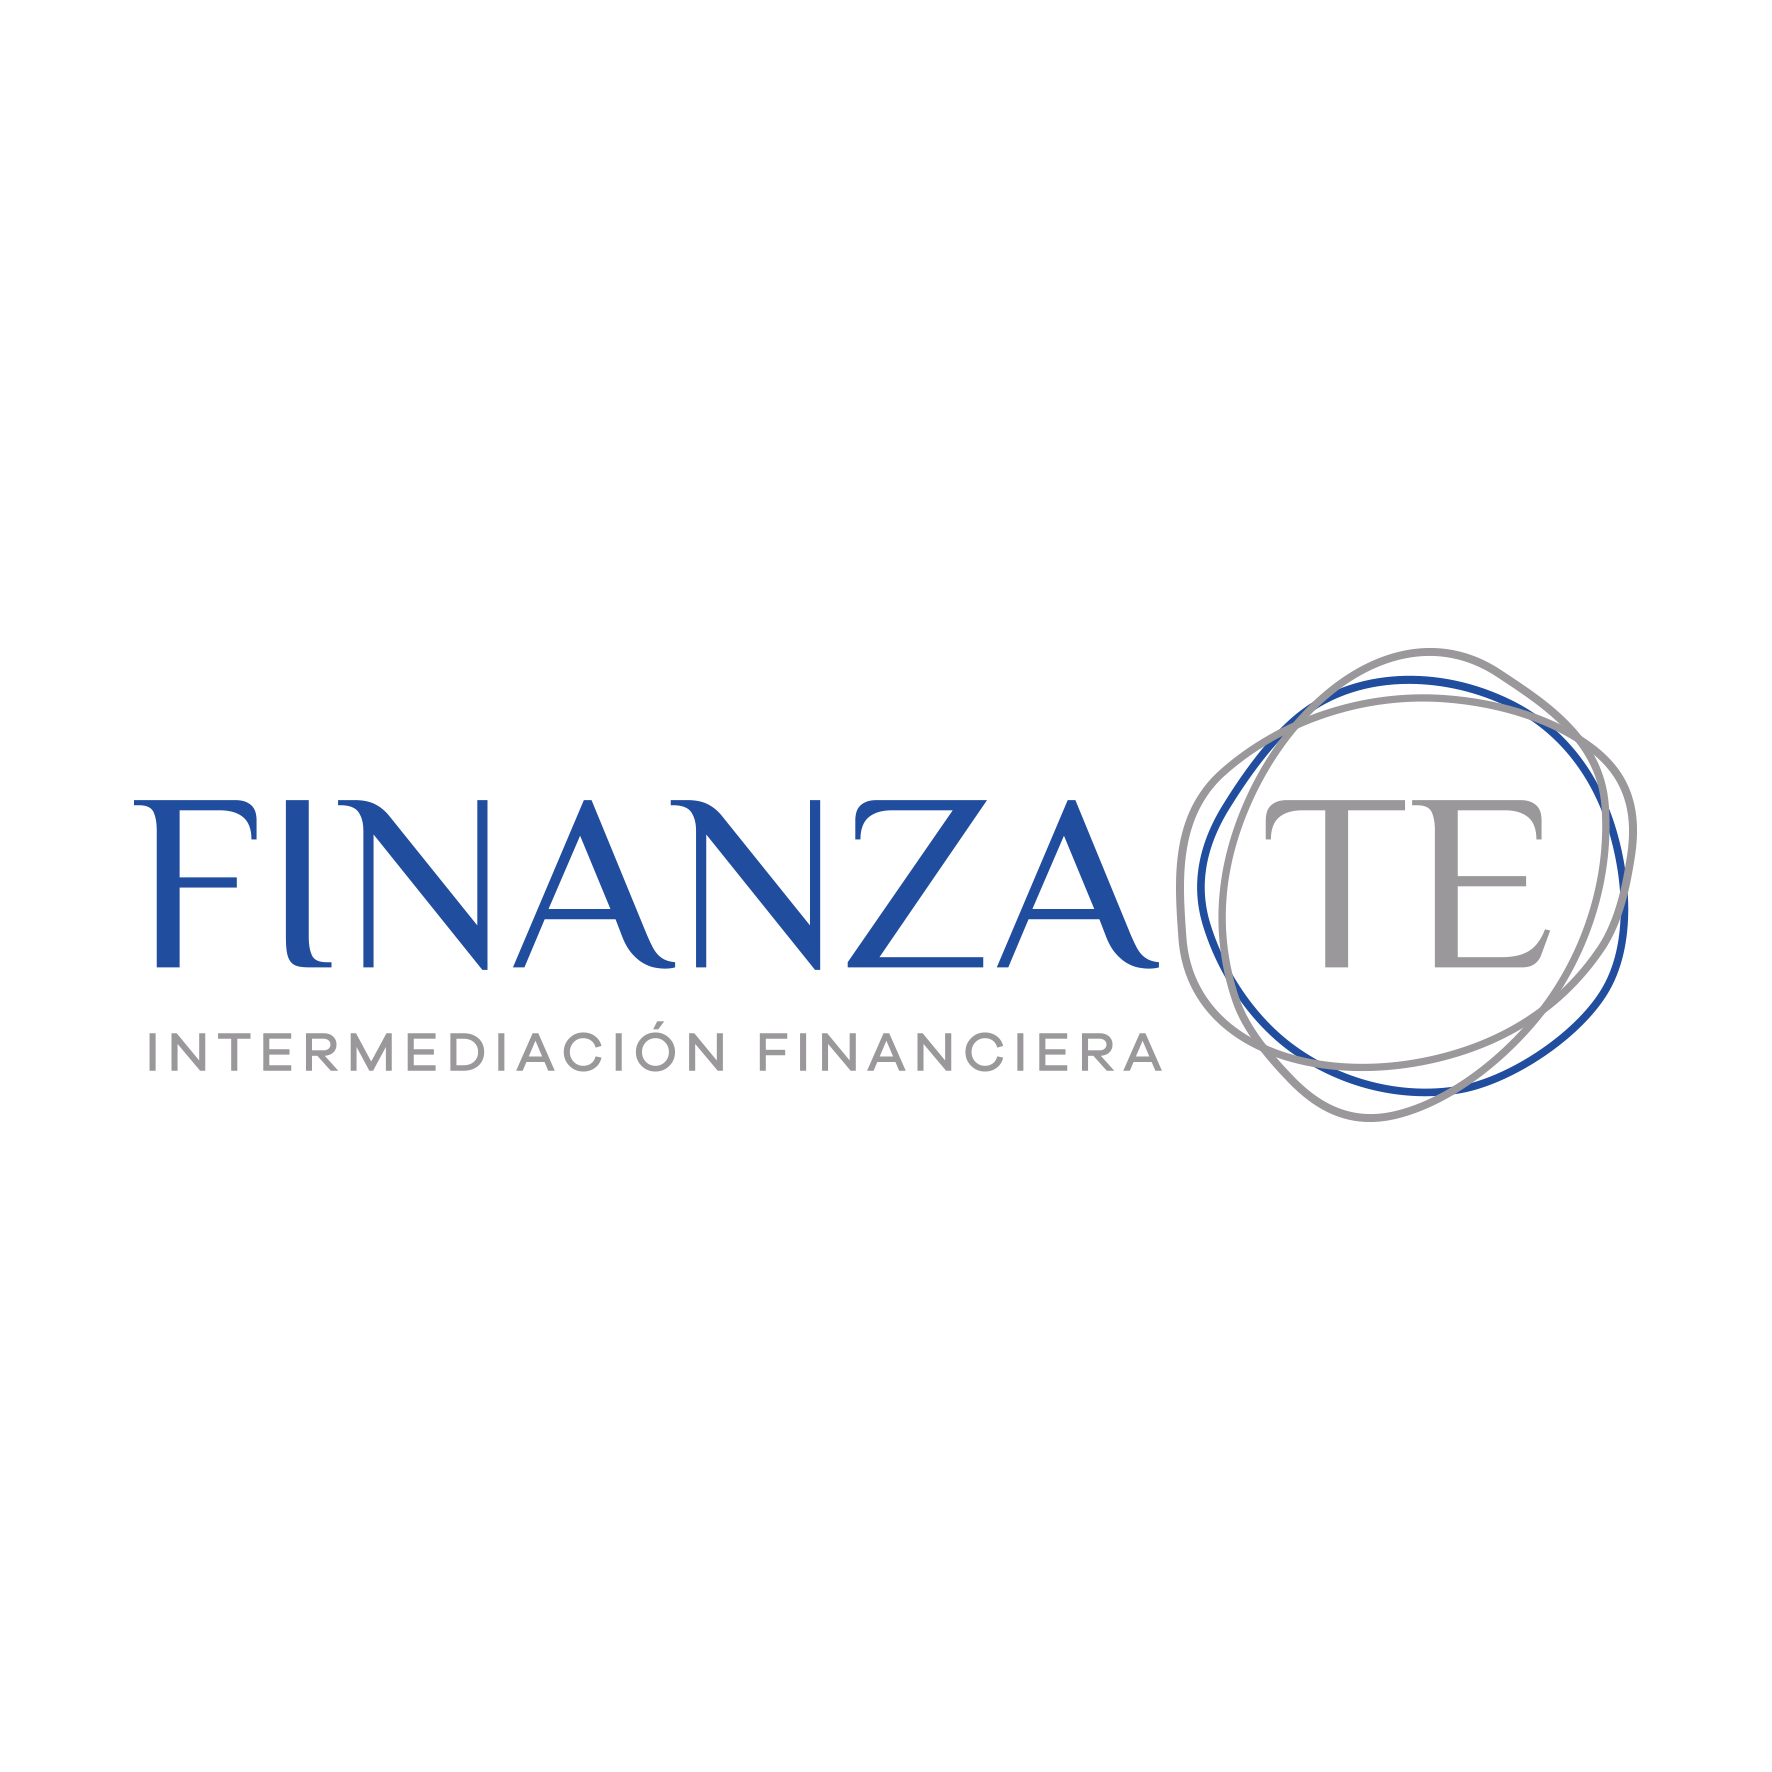 Finanzate Bilbao